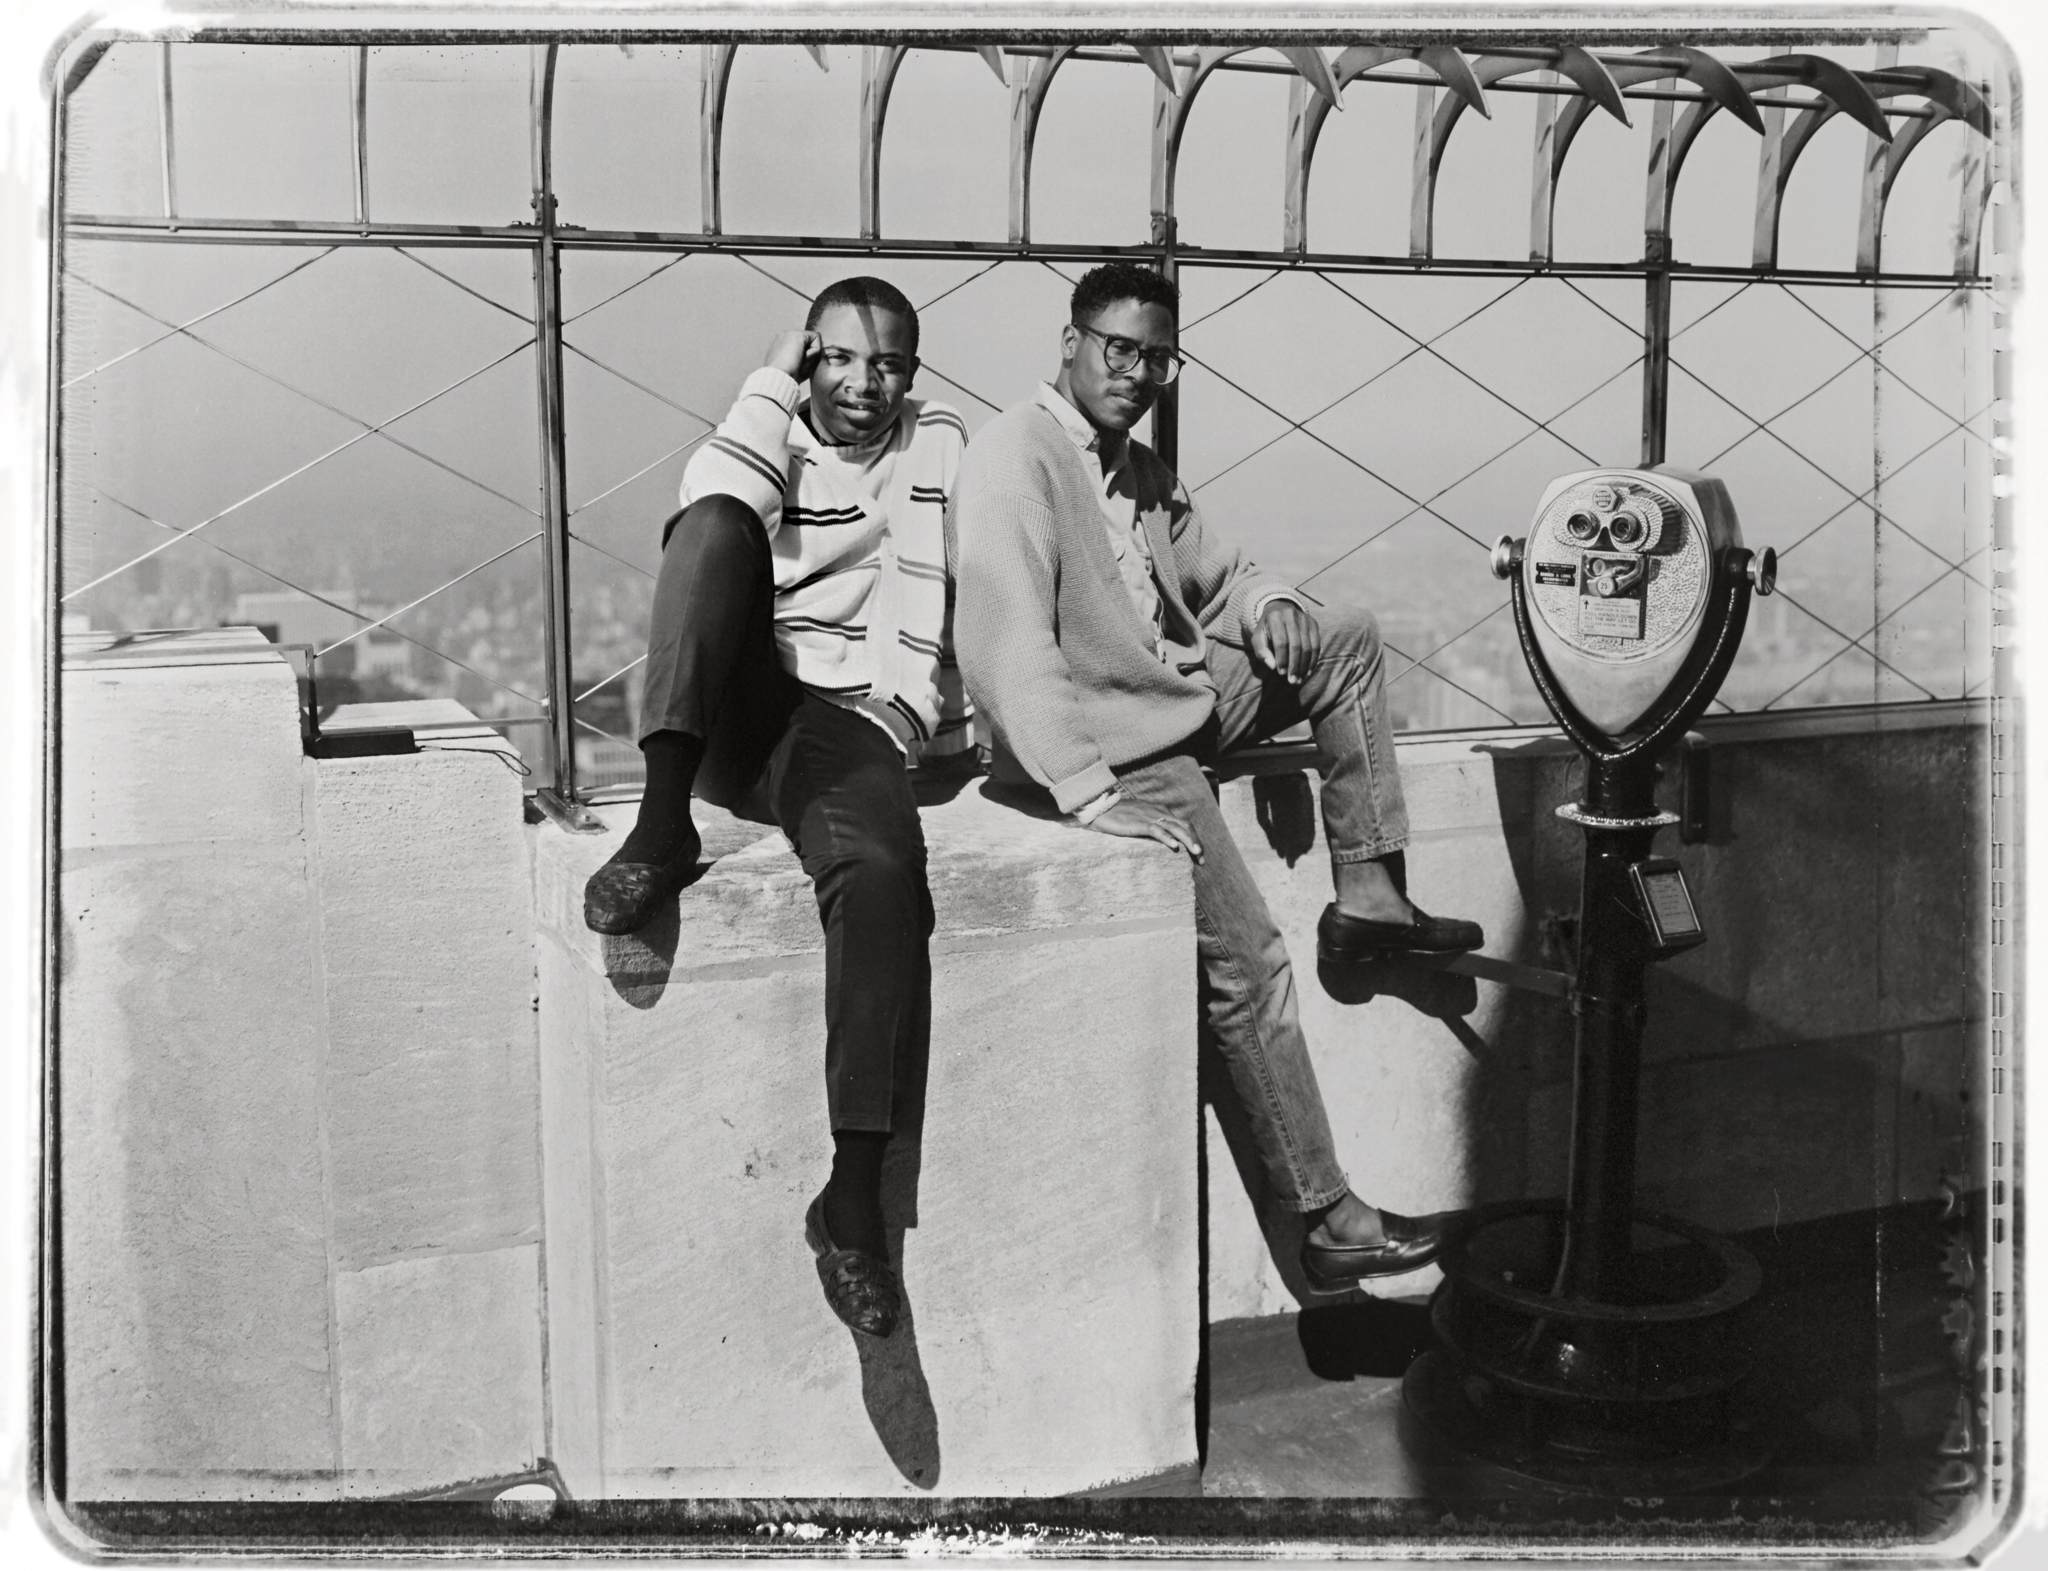 Empire State Building Observation Deck, 1982